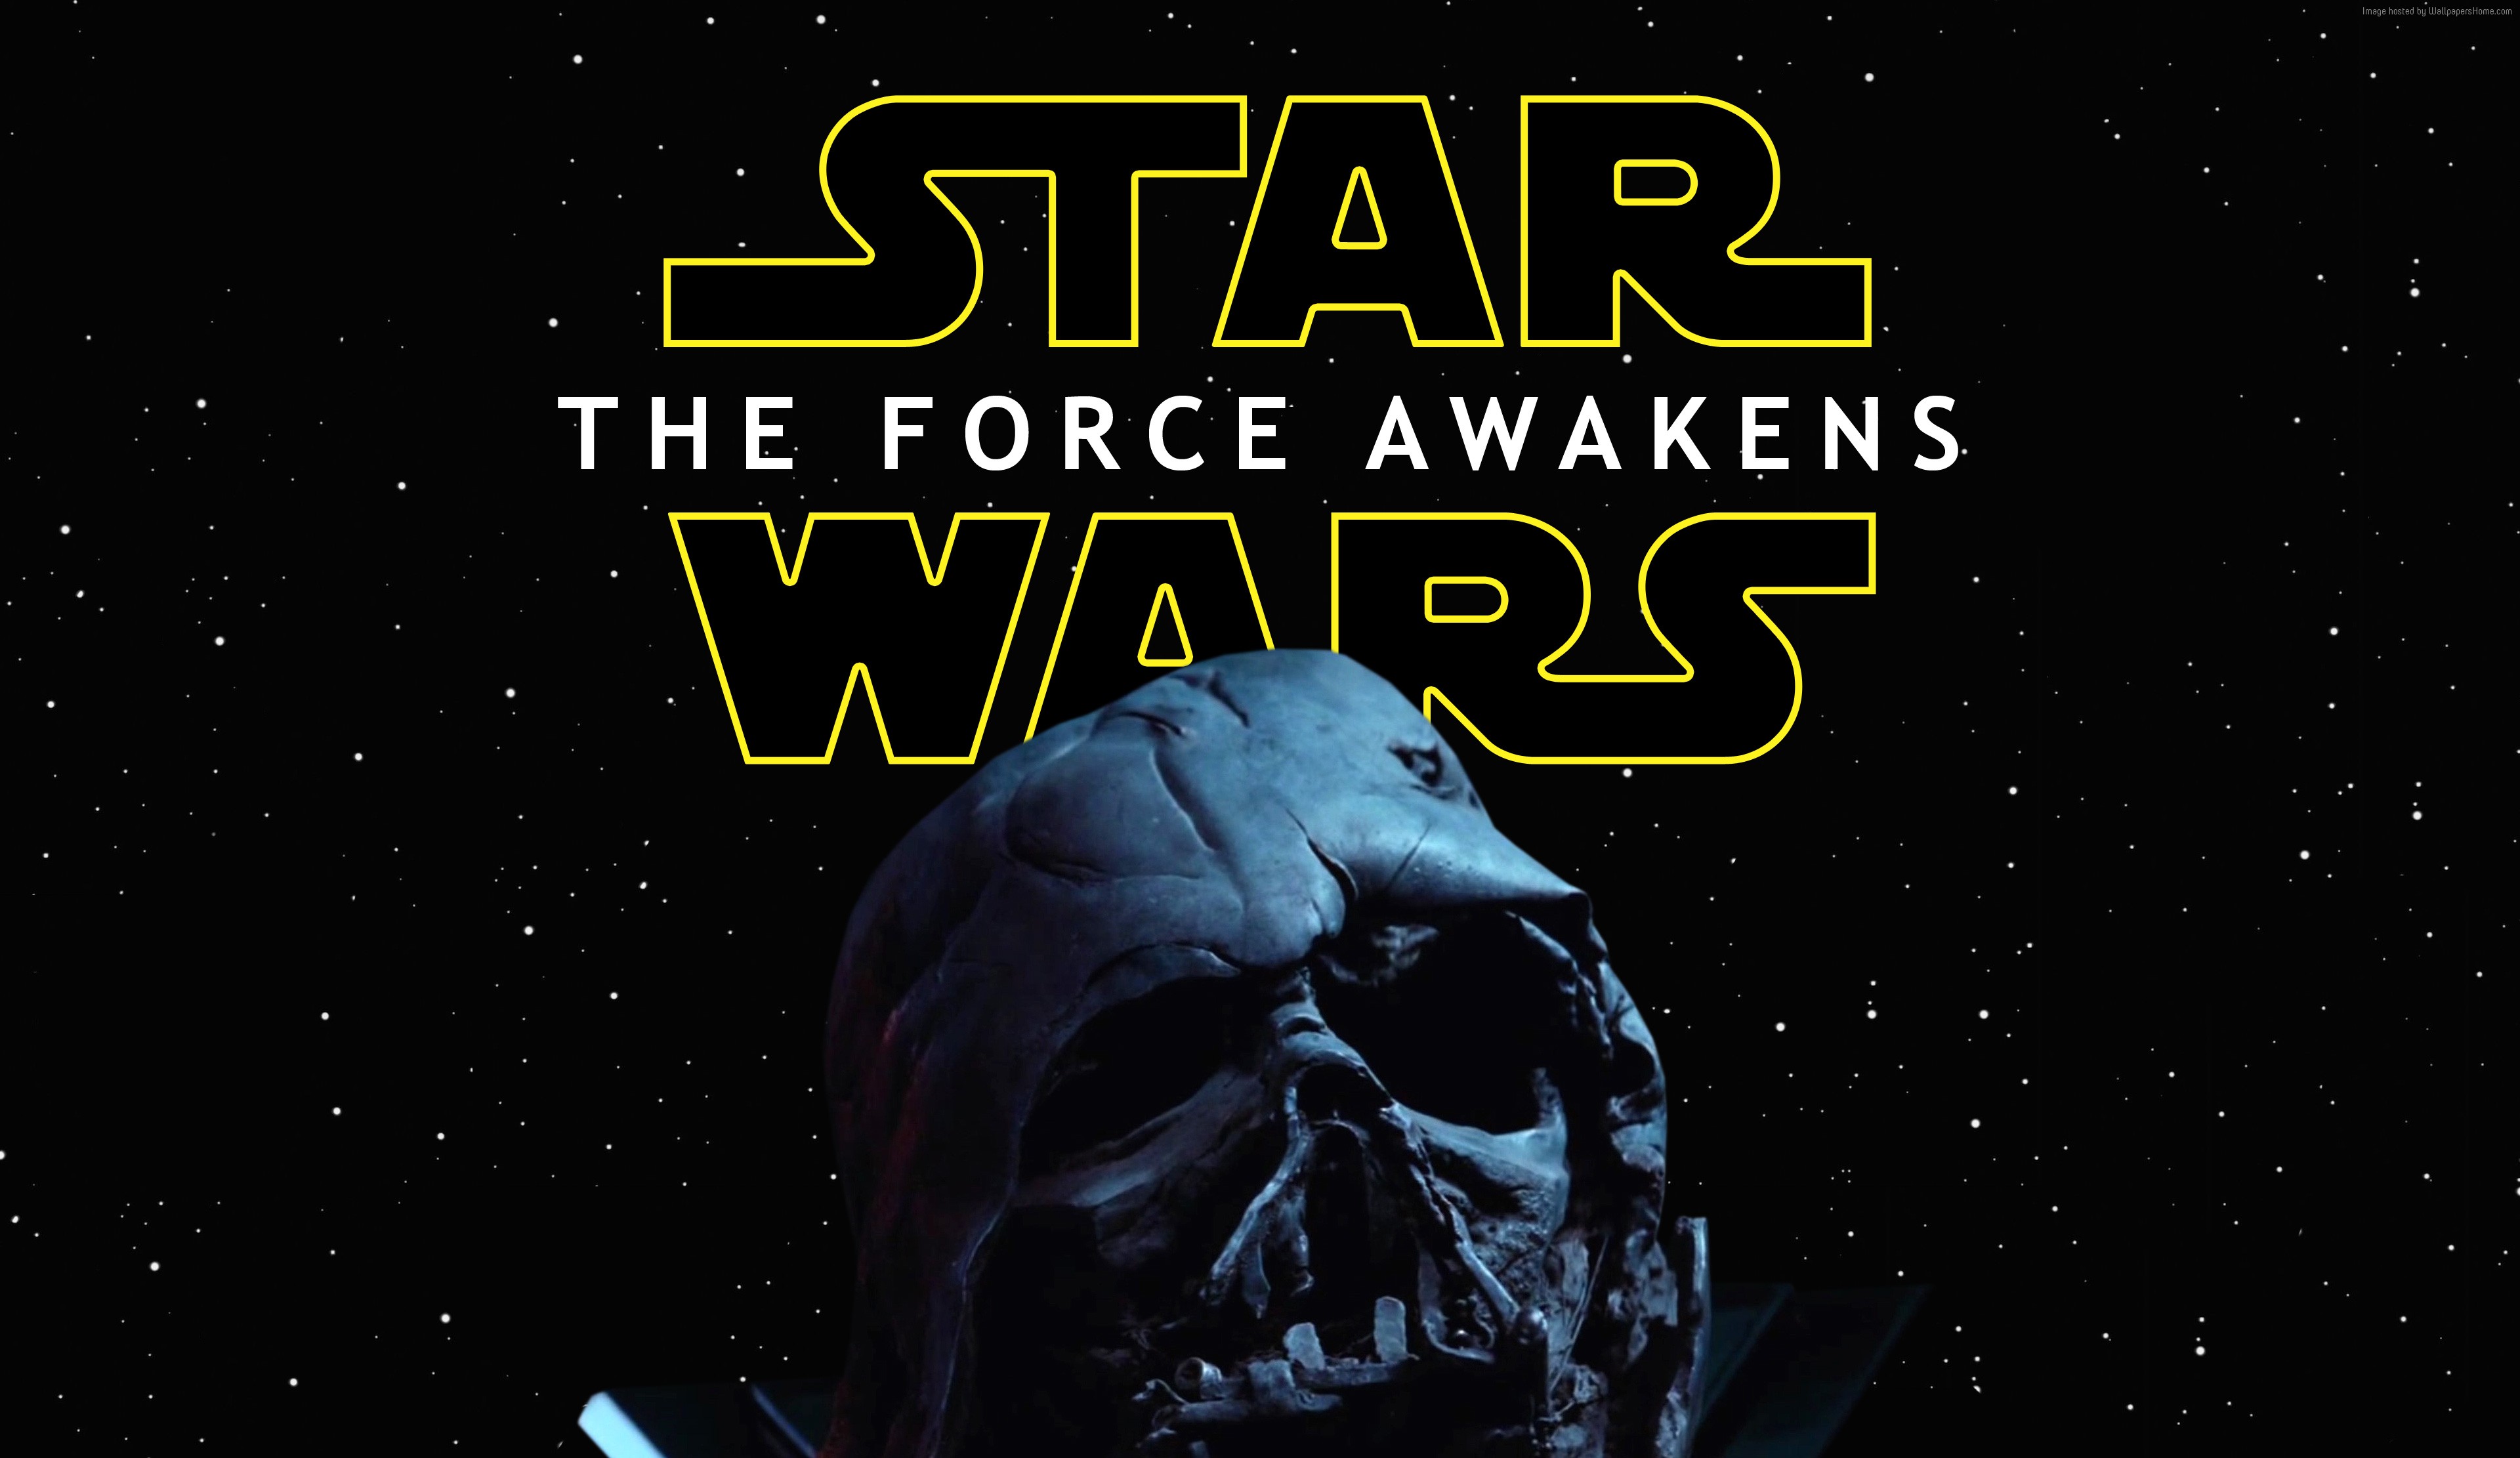 Star Wars Episode VII: The Force Awakens #9